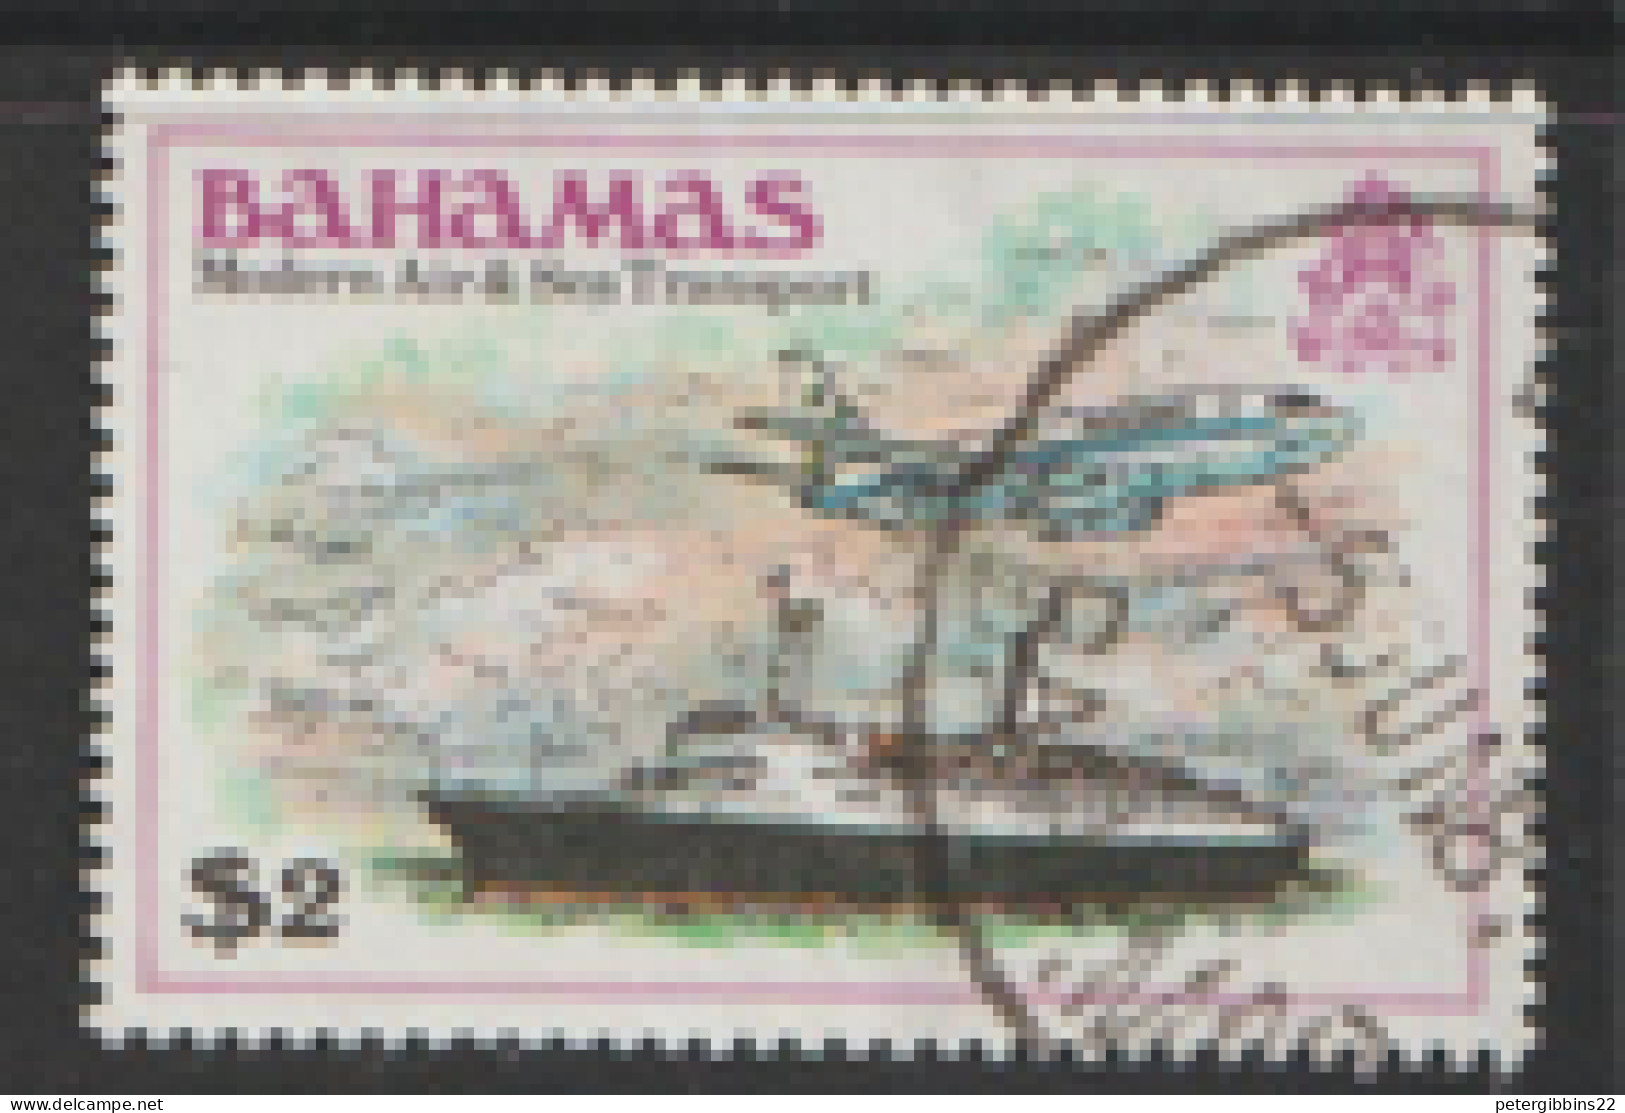 Bahamas 1980  SG 570  $2  Liner  Fine Used - Bahamas (1973-...)